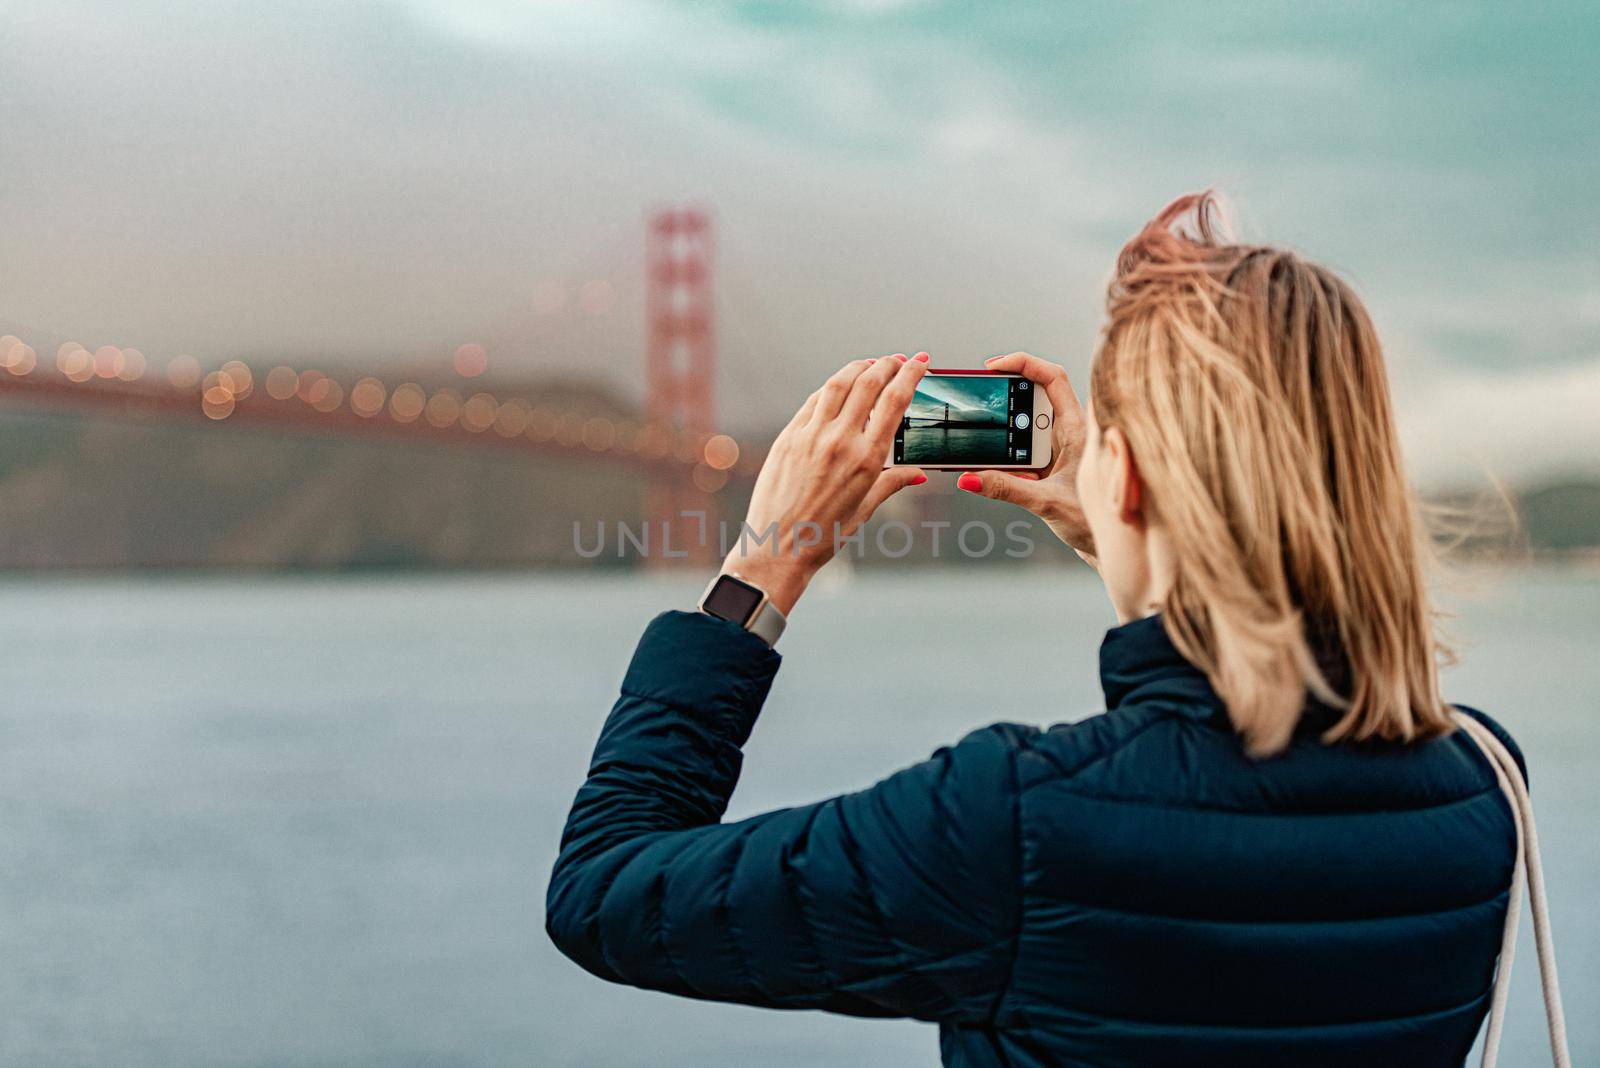 Golden gate bridge in San Francisco, California by Yolshin